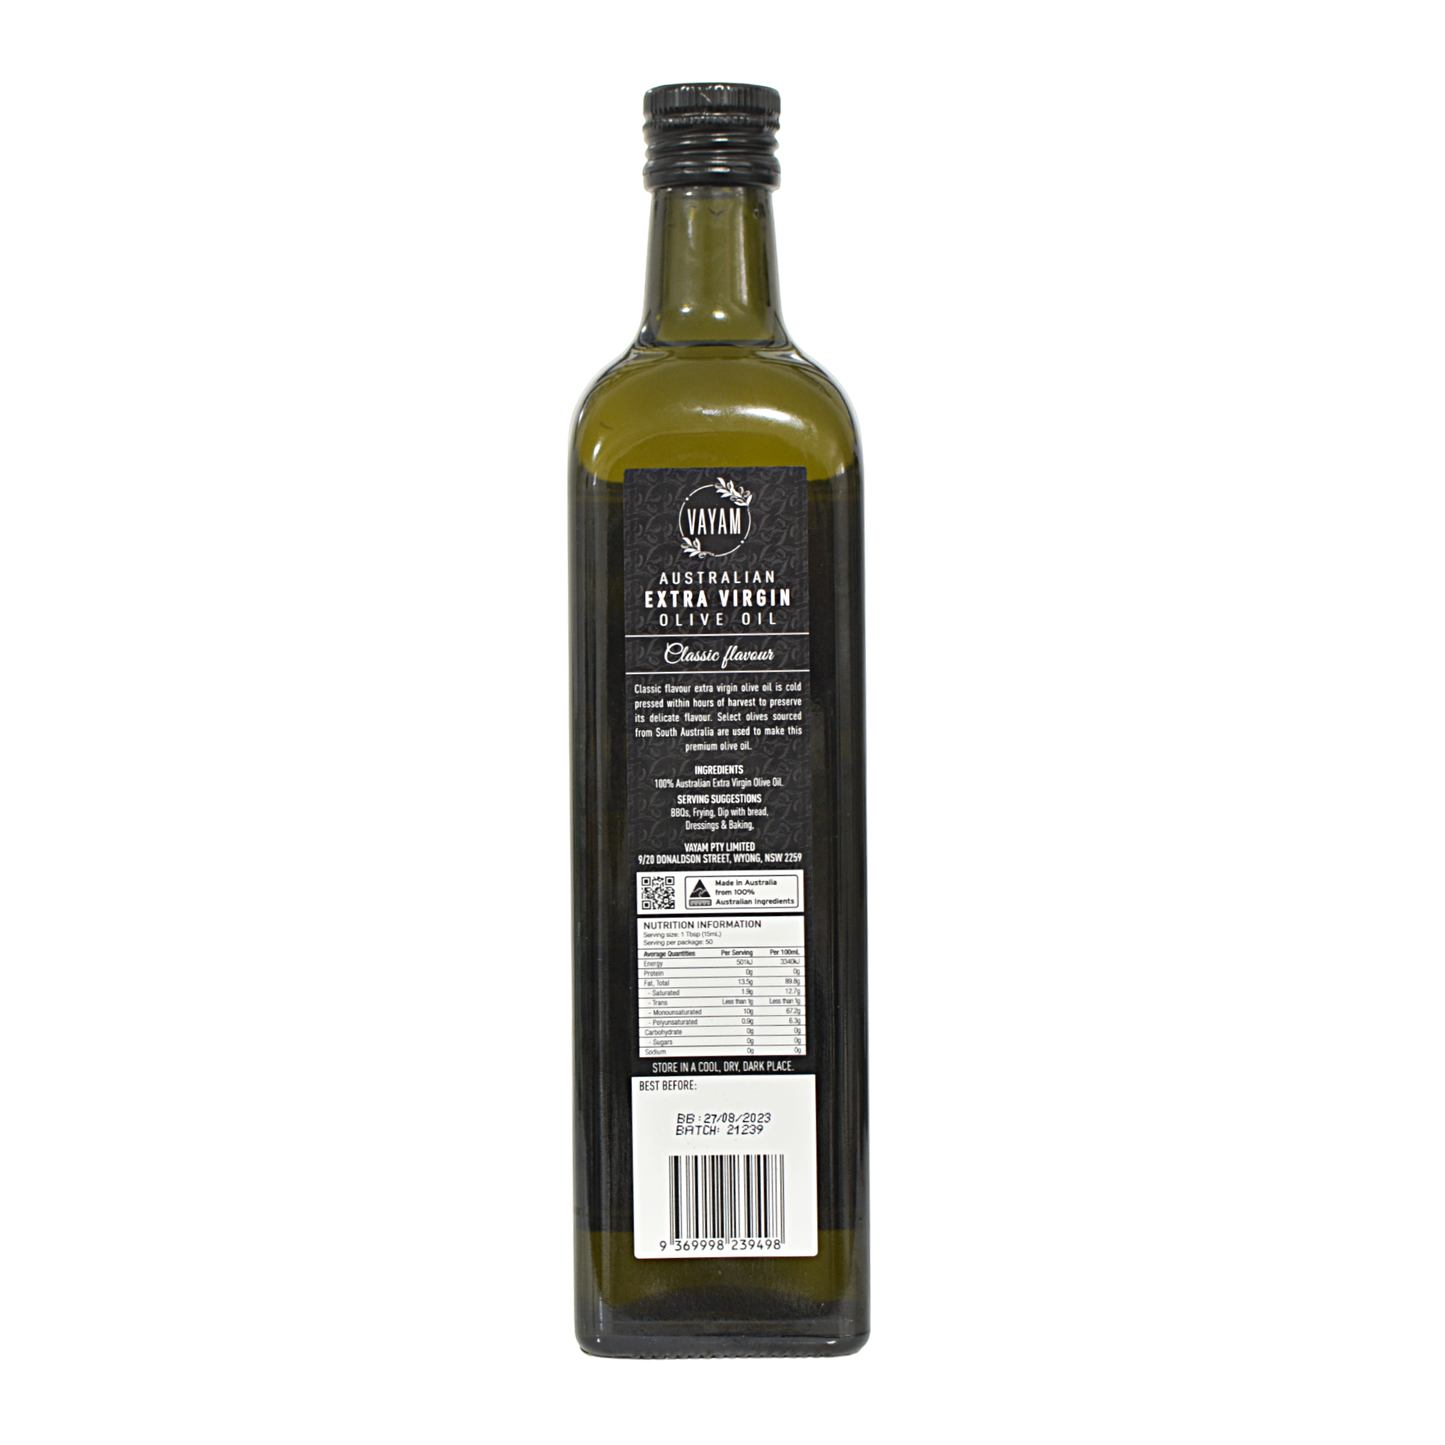 VAYAM Australian Extra Virgin Olive Oil (Classic) 750mL